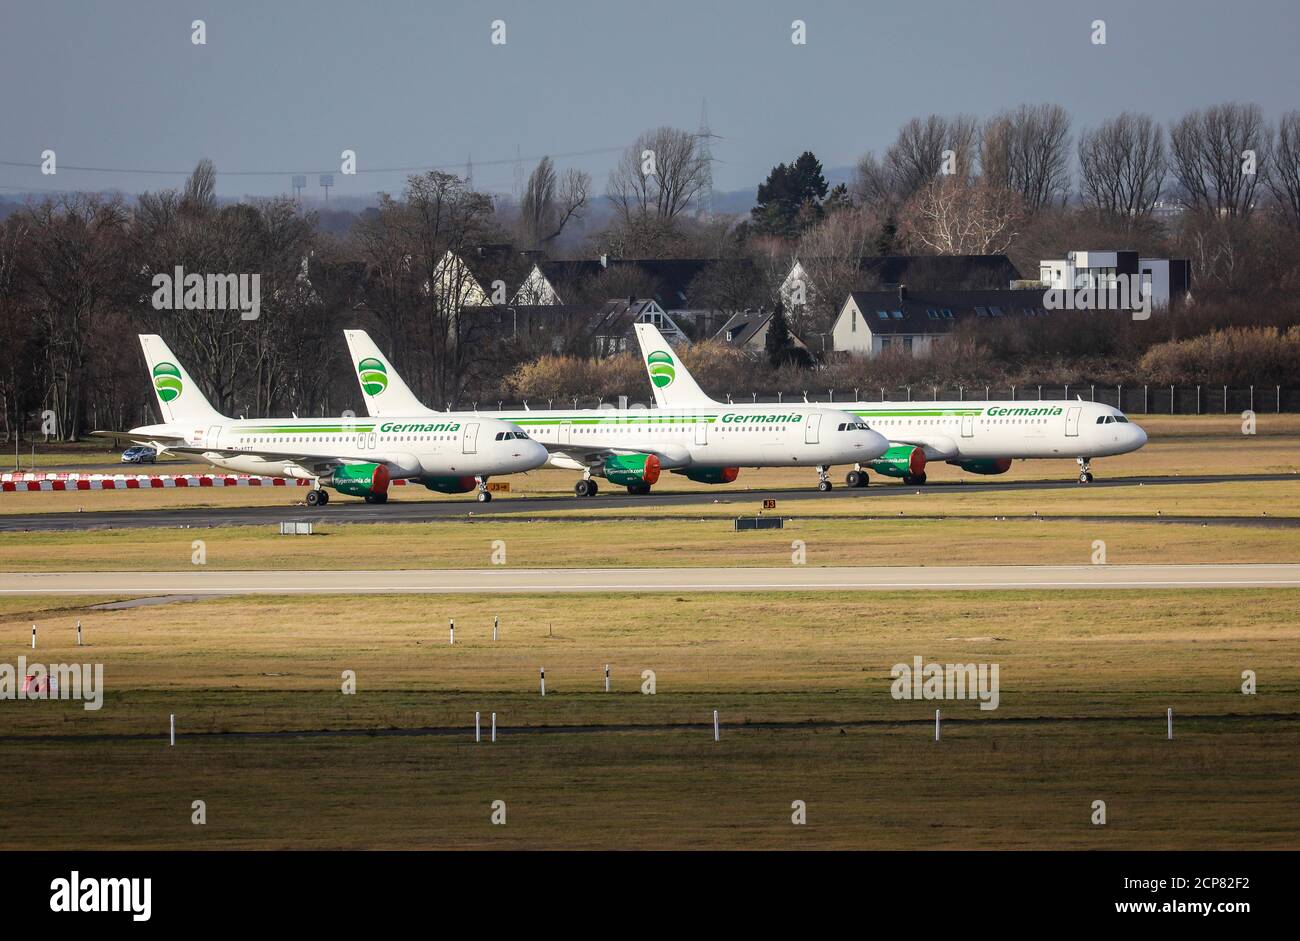 Duesseldorf, North Rhine-Westphalia, Germany - Germania aircraft parked at Duesseldorf Airport Stock Photo